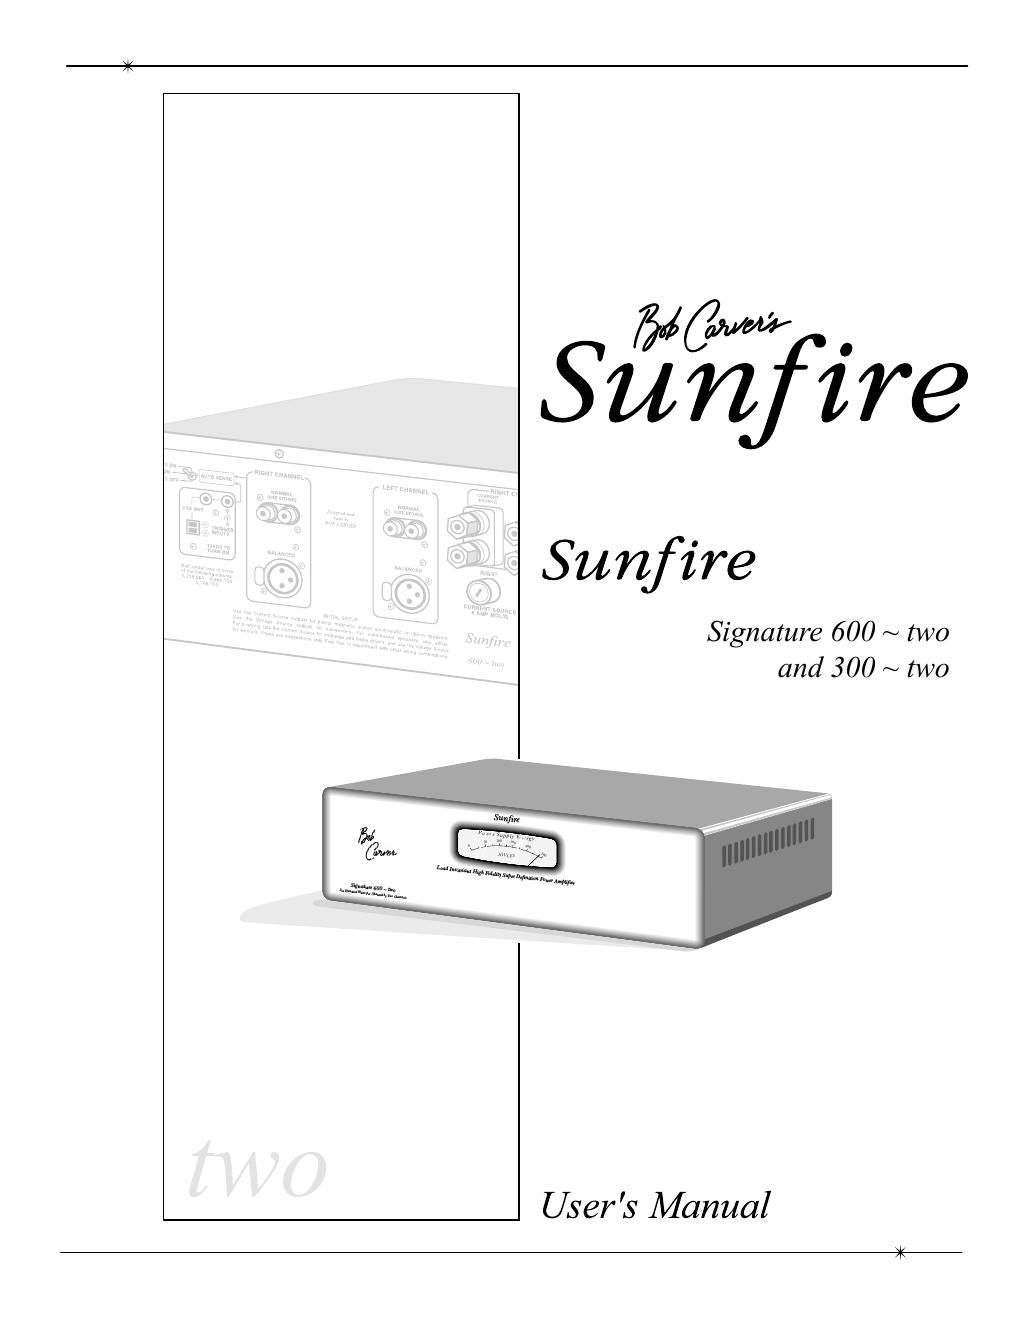 sunfire signature 300 600 2 owners manual